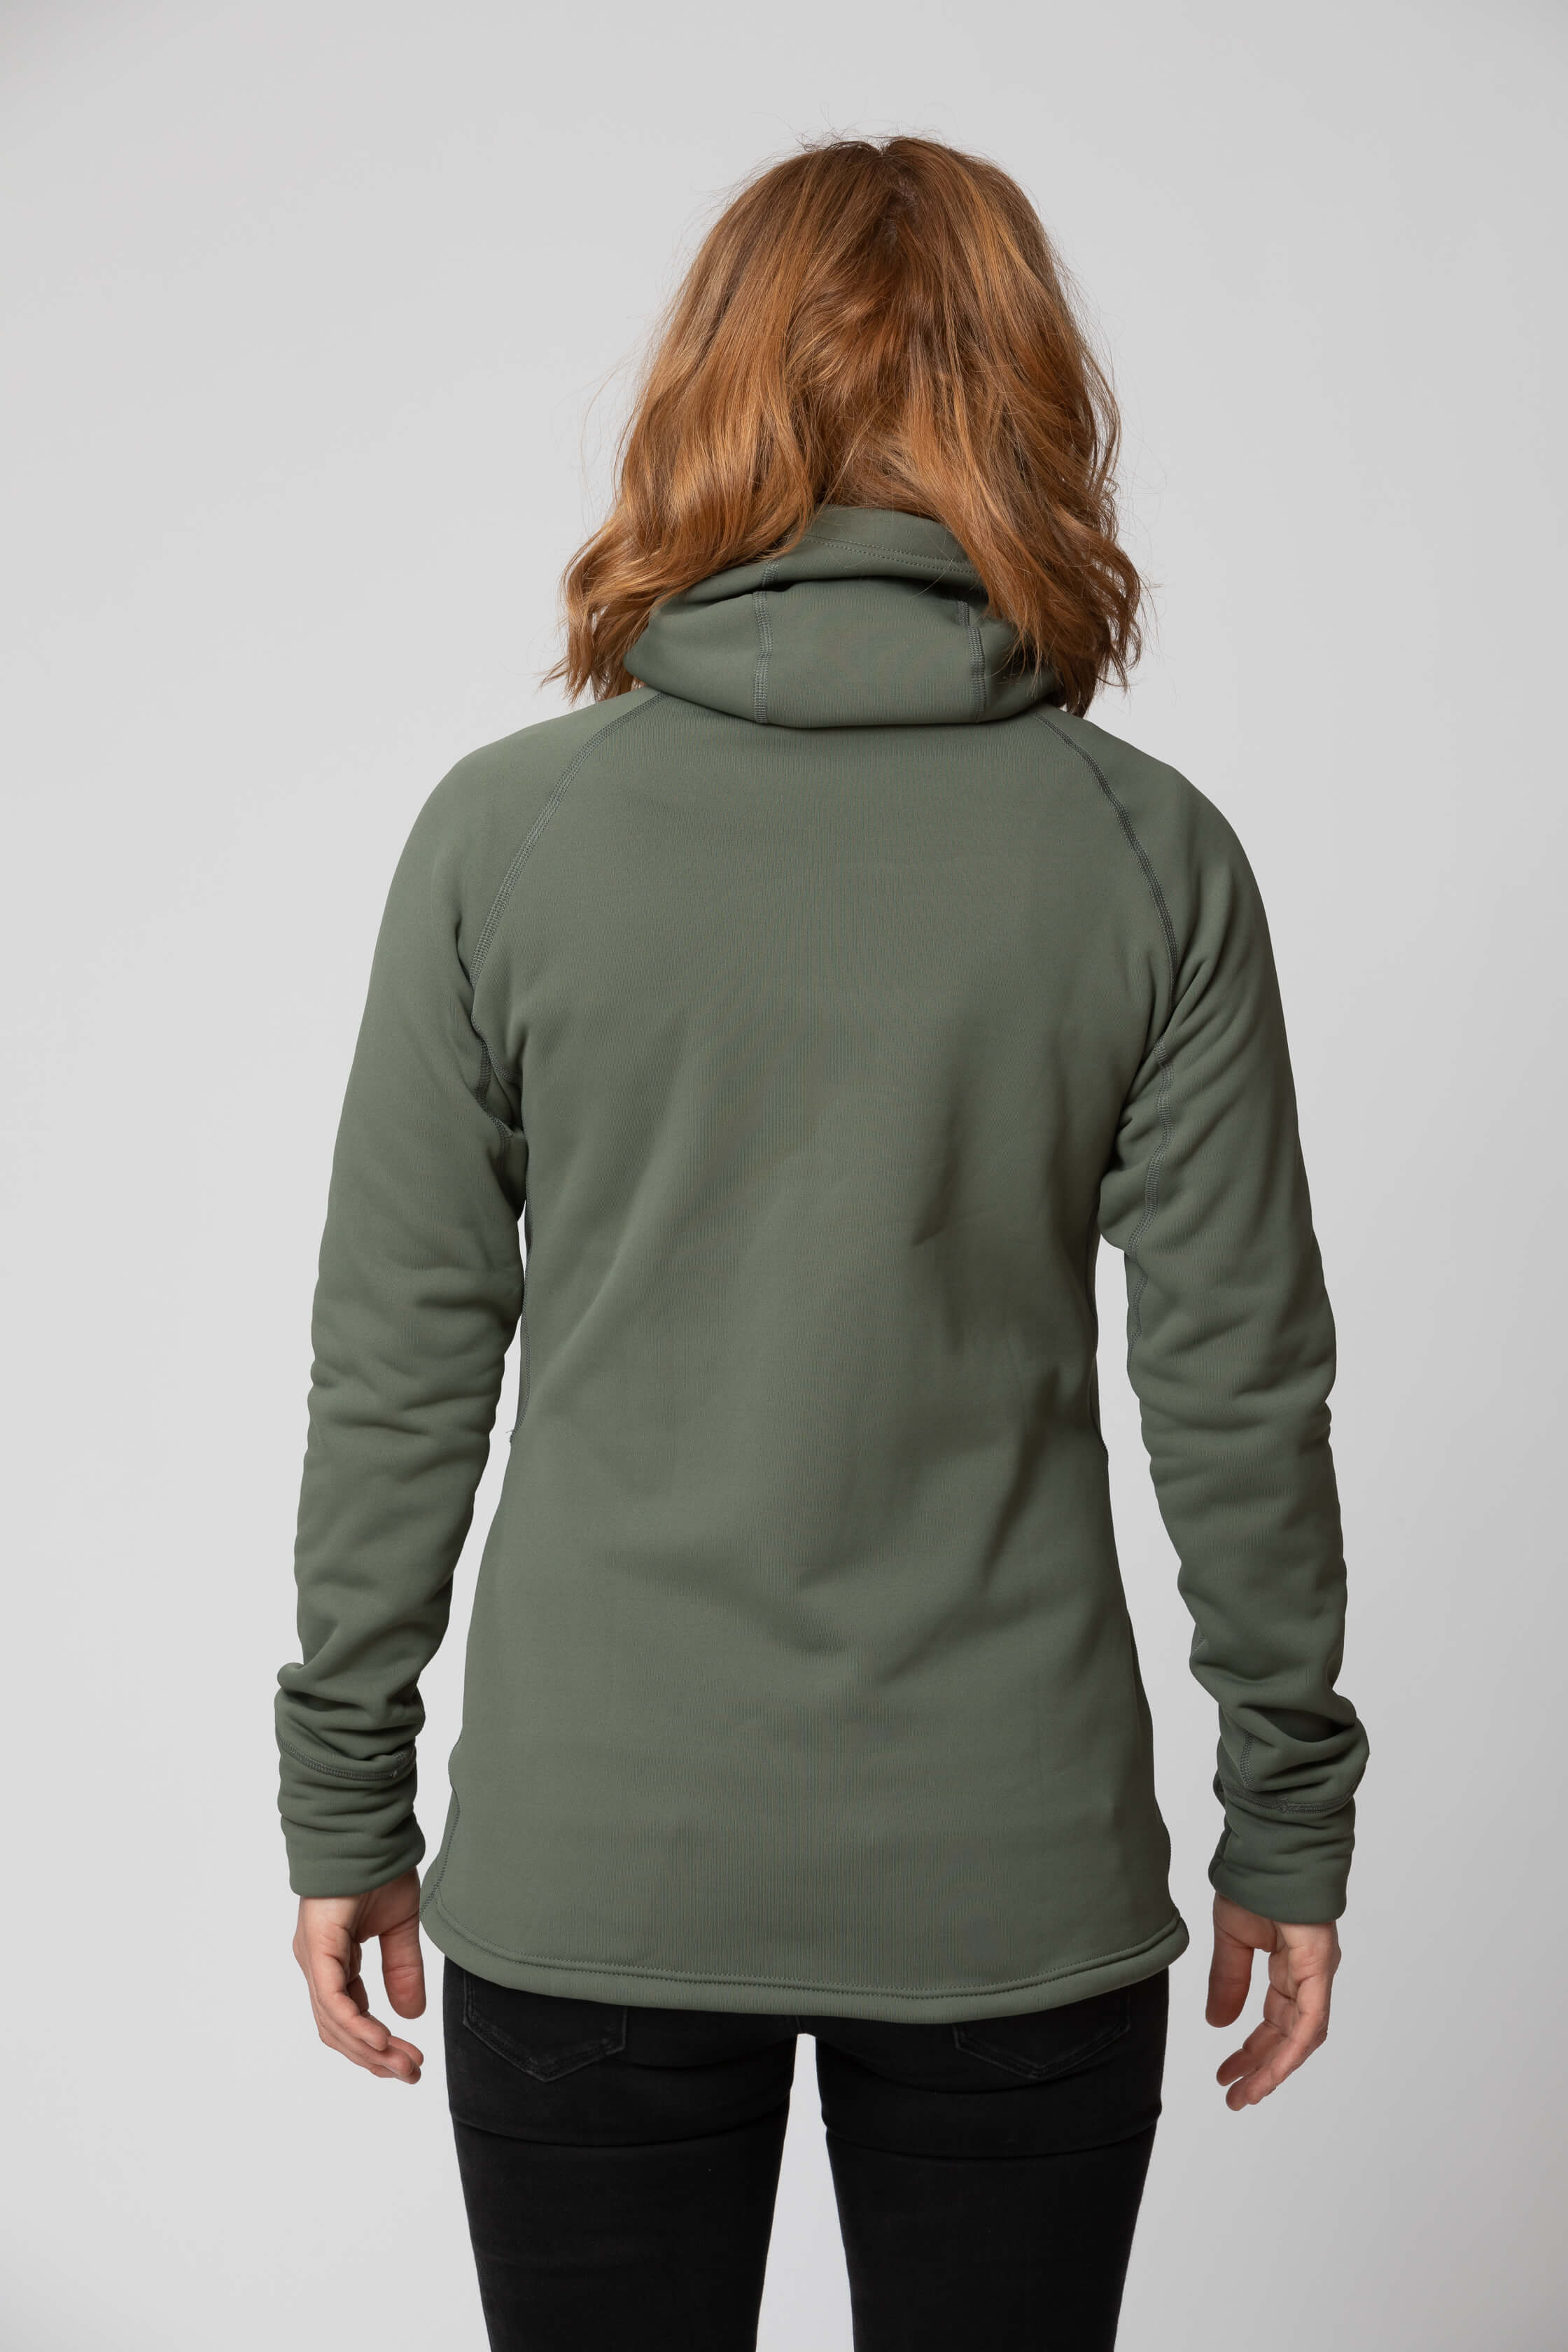 Women's green fleece jacket - back view of the Arctic Legacy Nanuk Pro Fleece Hoodie#color_dusty-olive